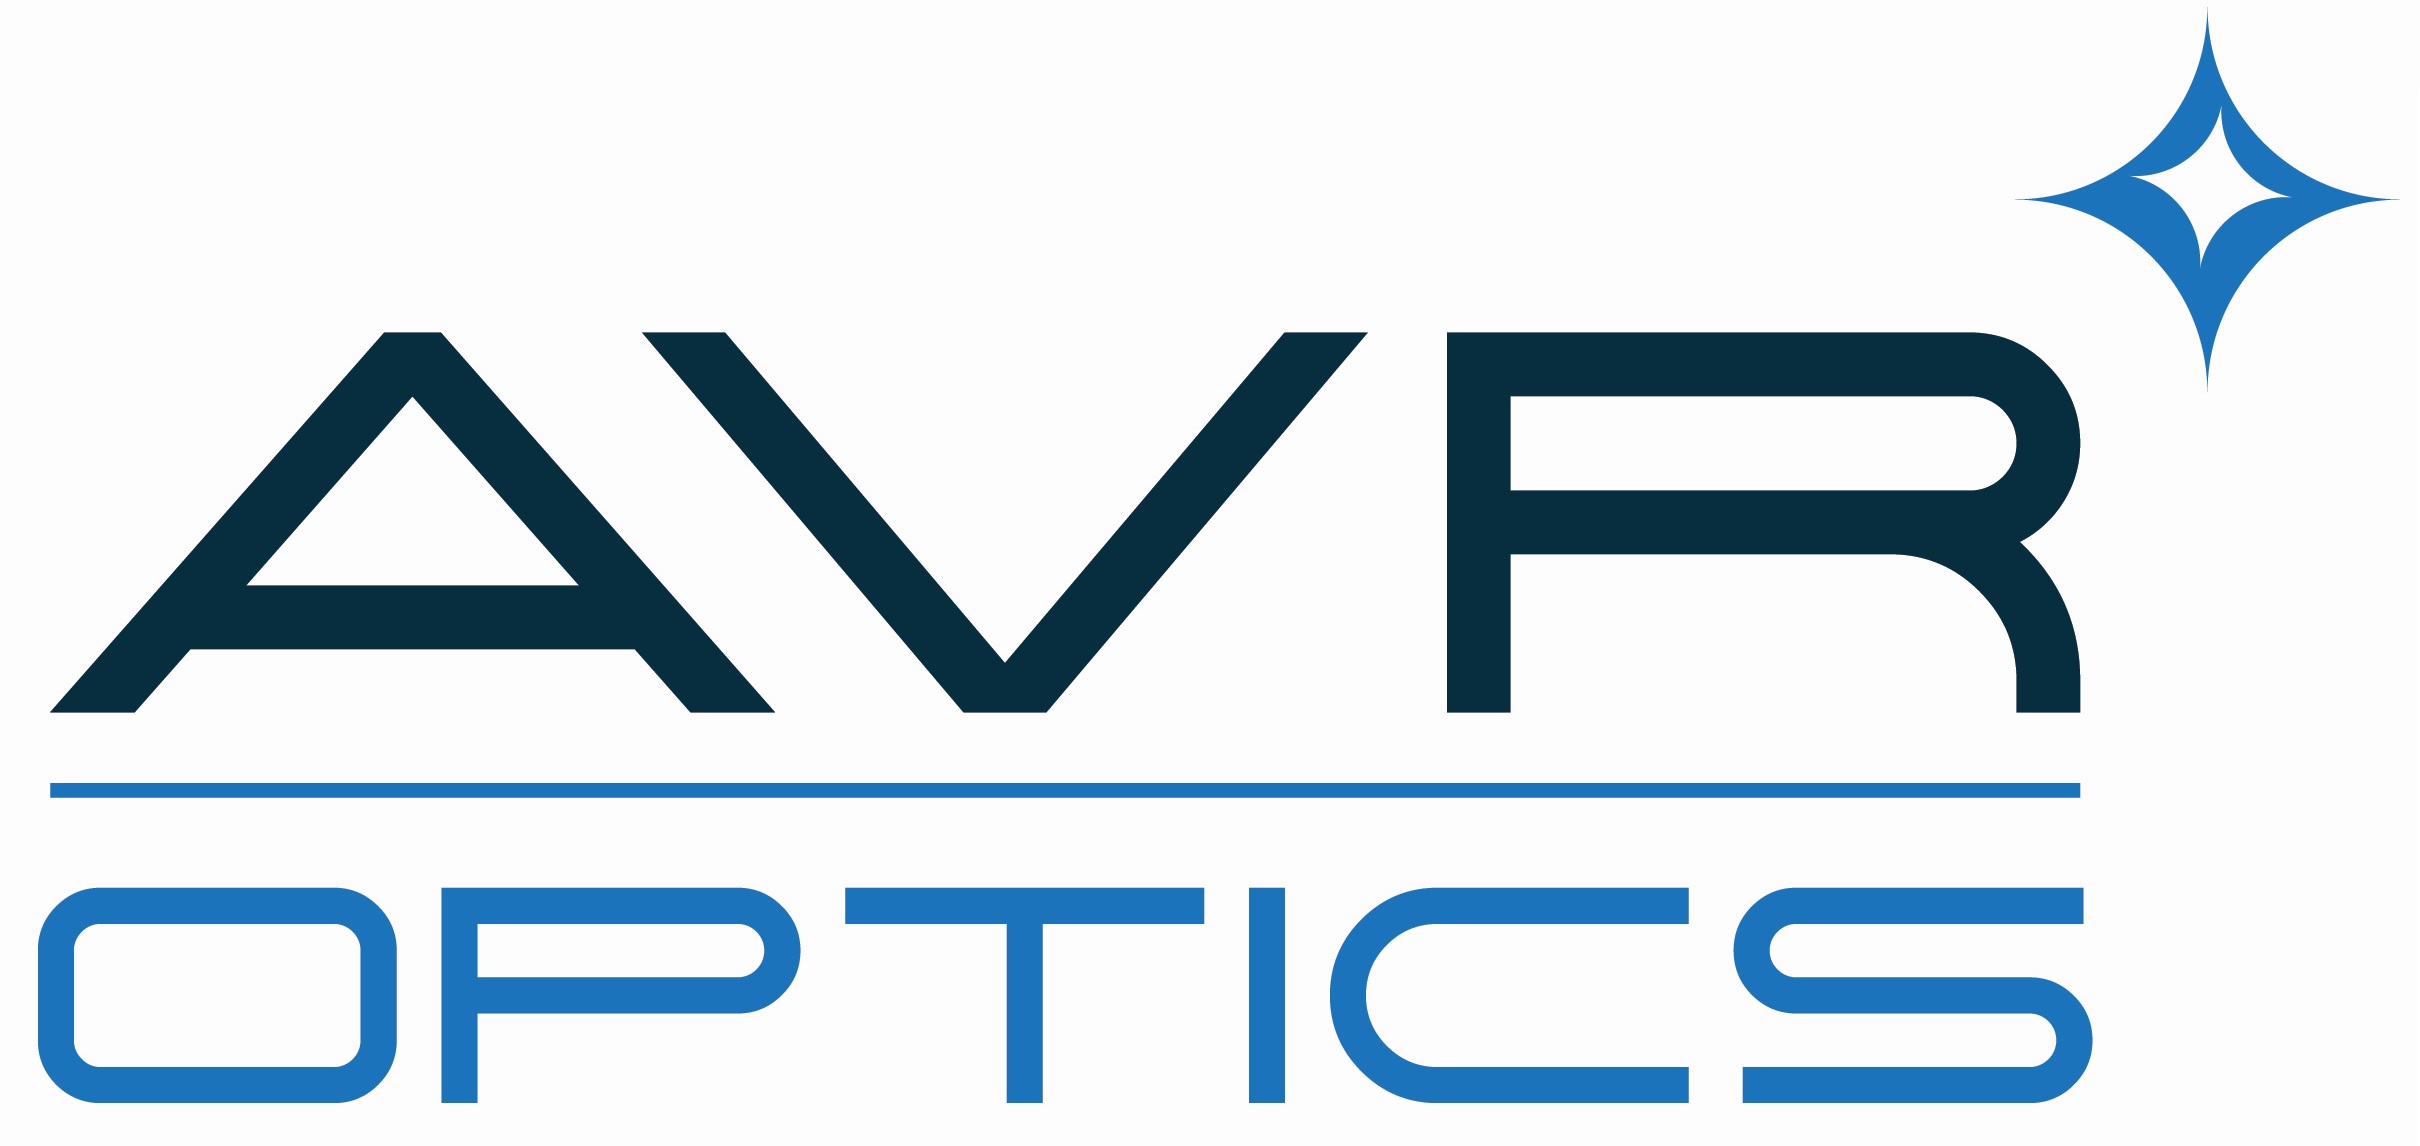 AVR Optics Logo